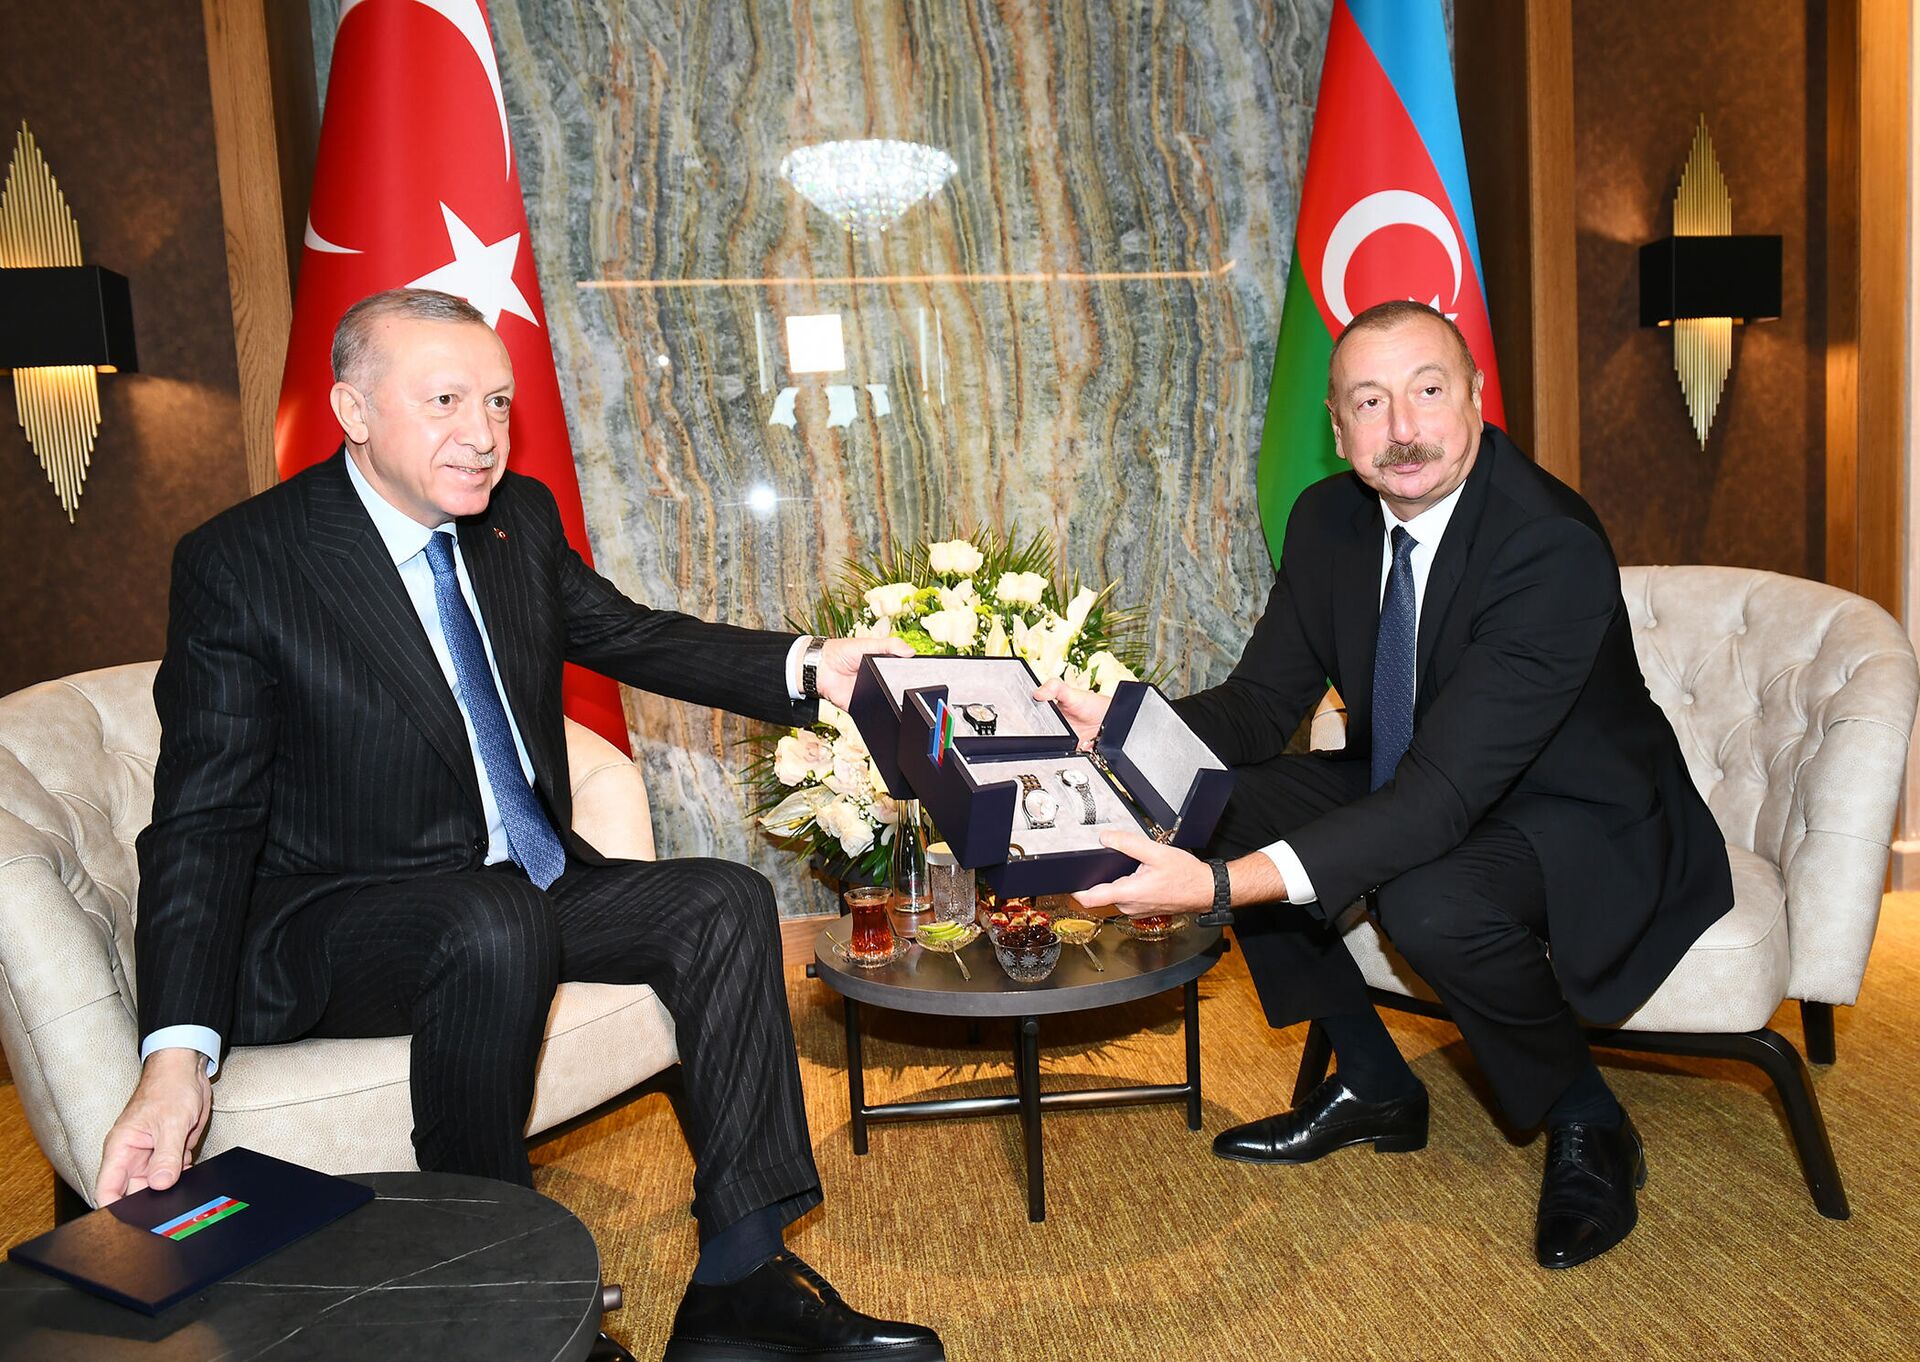 Реджеп Тайип Эрдоган подарил Президенту Ильхаму Алиеву часы с изображением «Харыбюльбюль»  - Sputnik Азербайджан, 1920, 26.10.2021